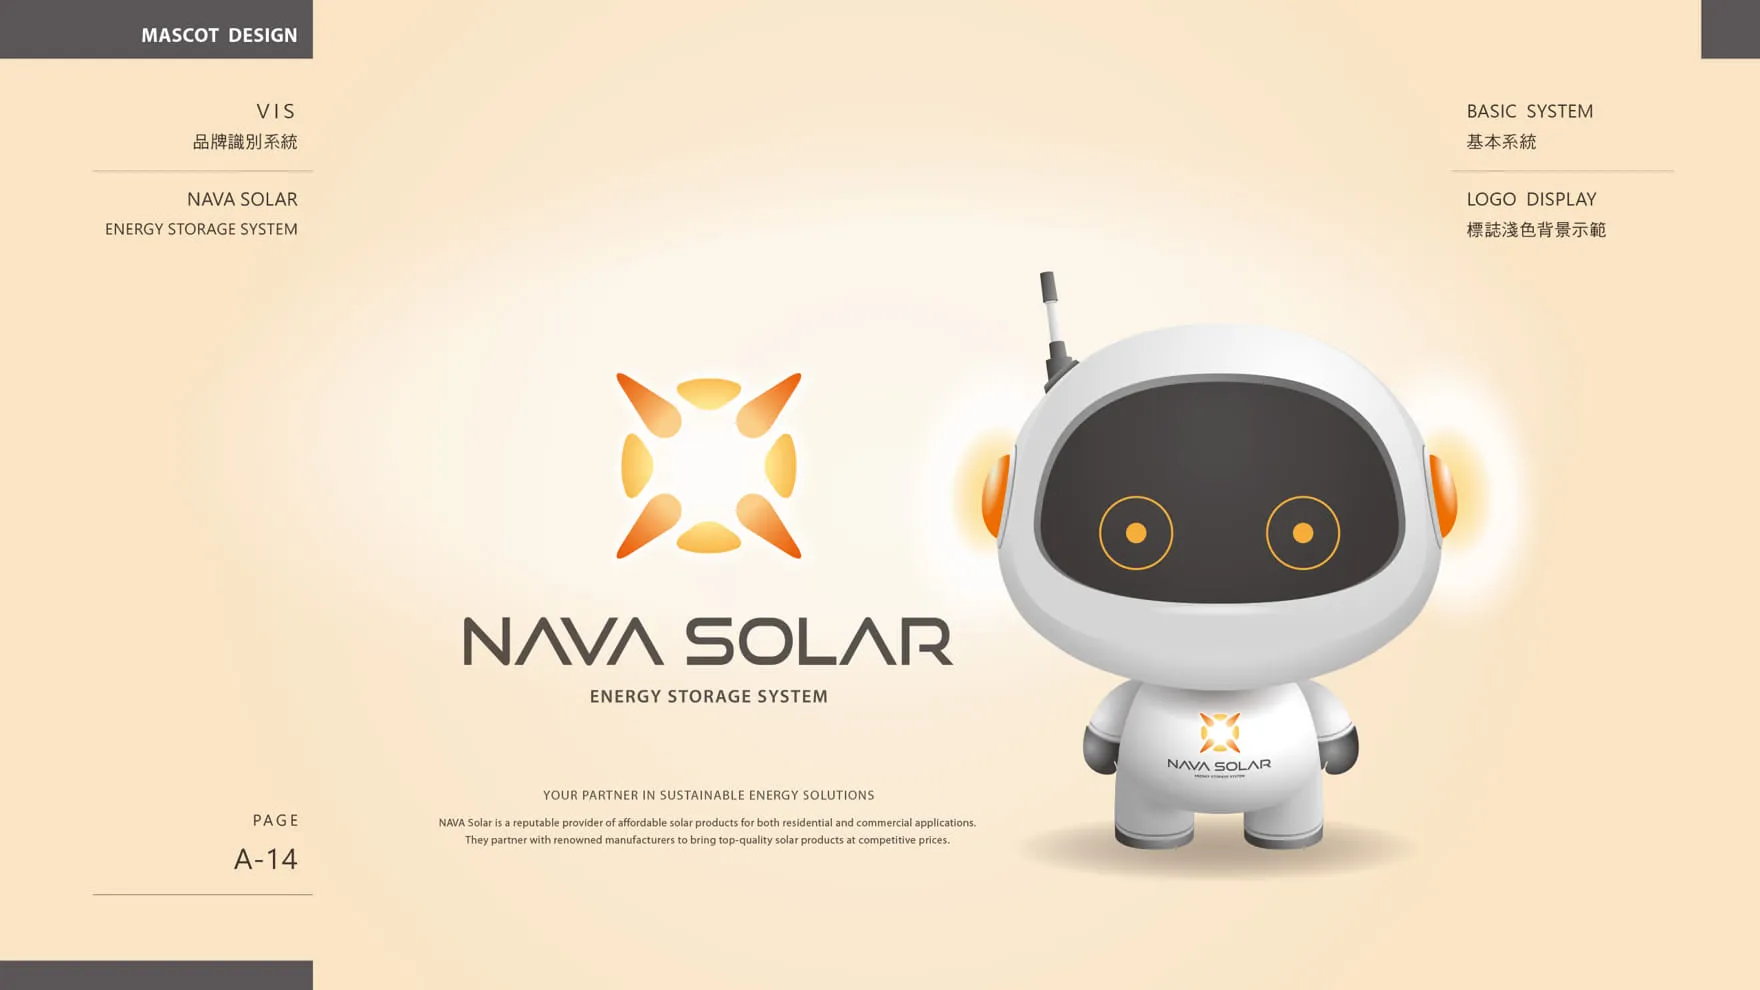 NAVA SOLAR 太陽能光電存儲LOGO品牌吉祥物 Mascot Guidelines